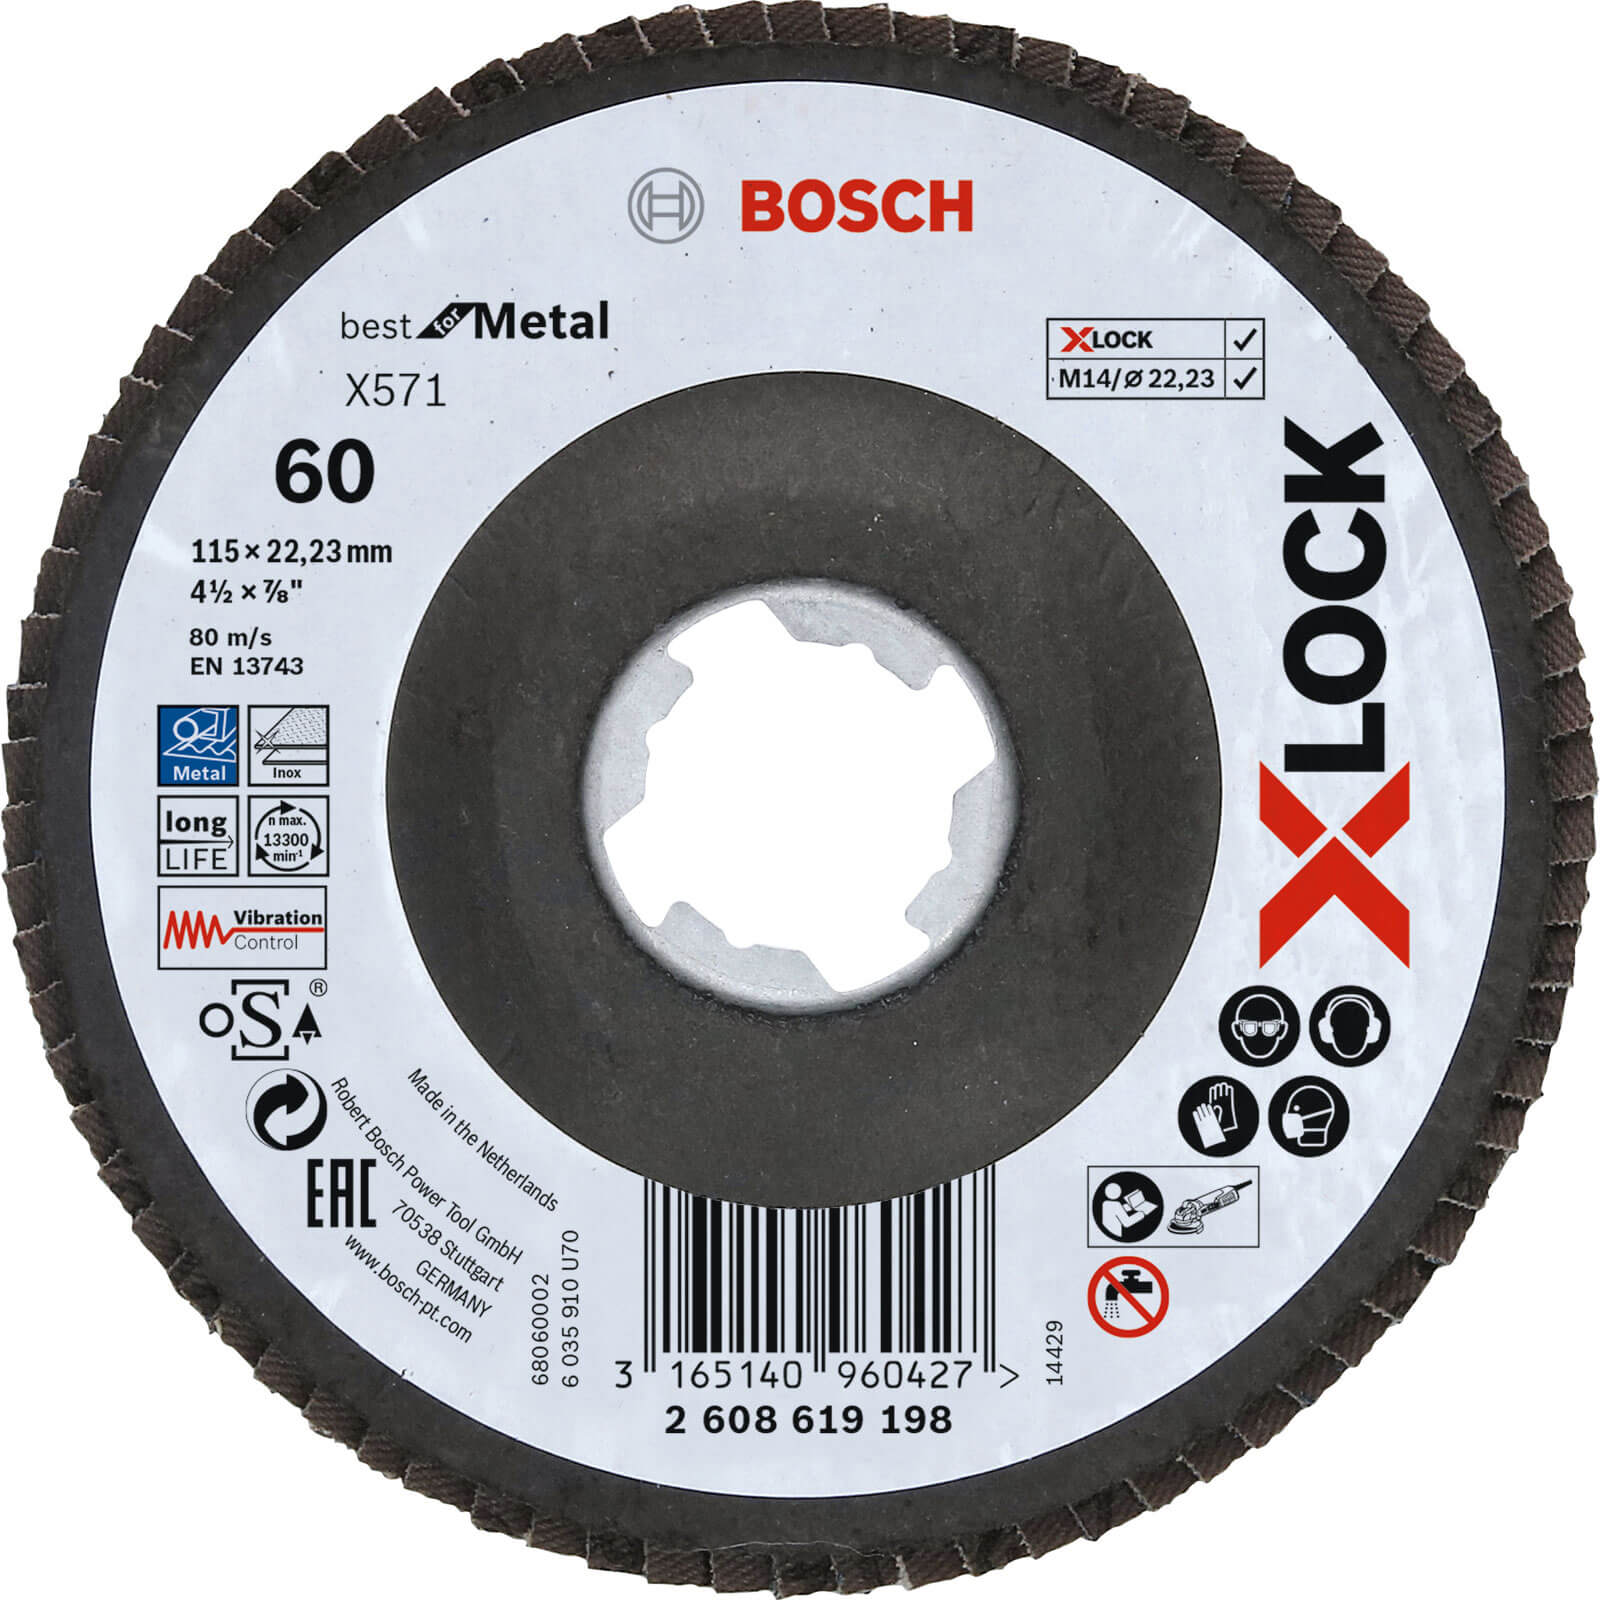 Image of Bosch X Lock Zirconium Abrasive Flap Disc 115mm 60g Pack of 1